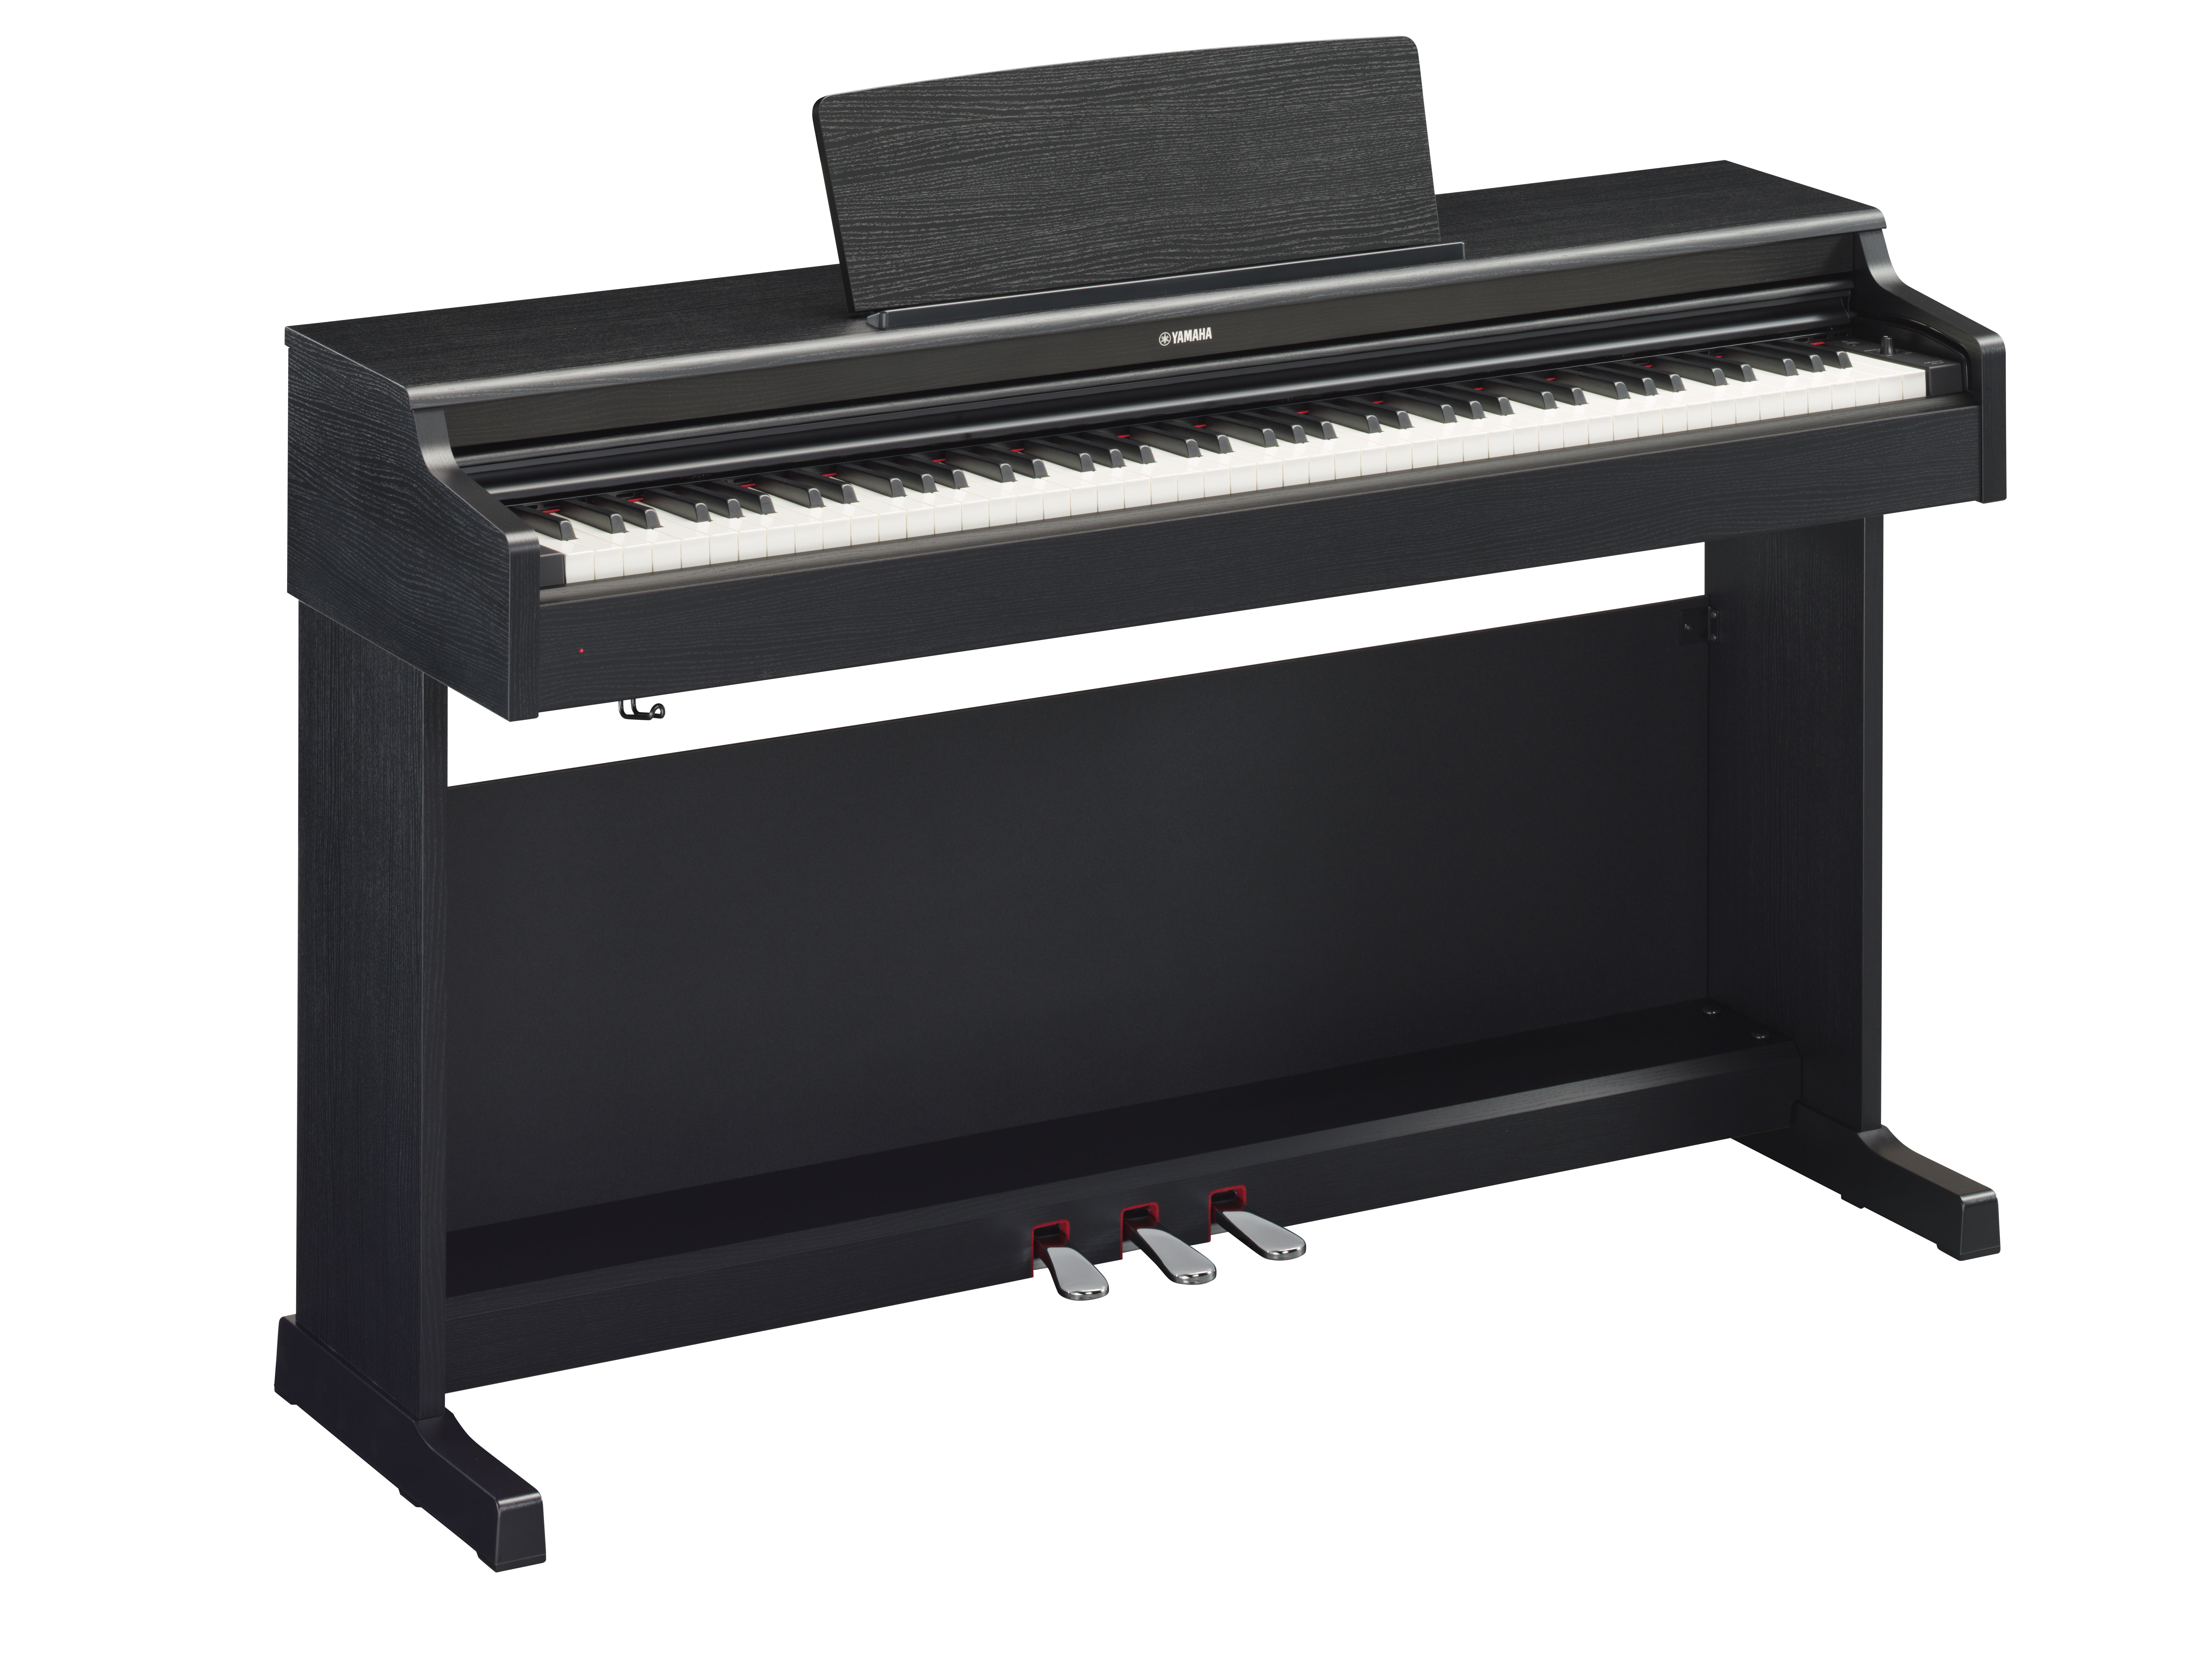 Yamaha Ydp-164 Arius - Black - Digital piano with stand - Variation 1